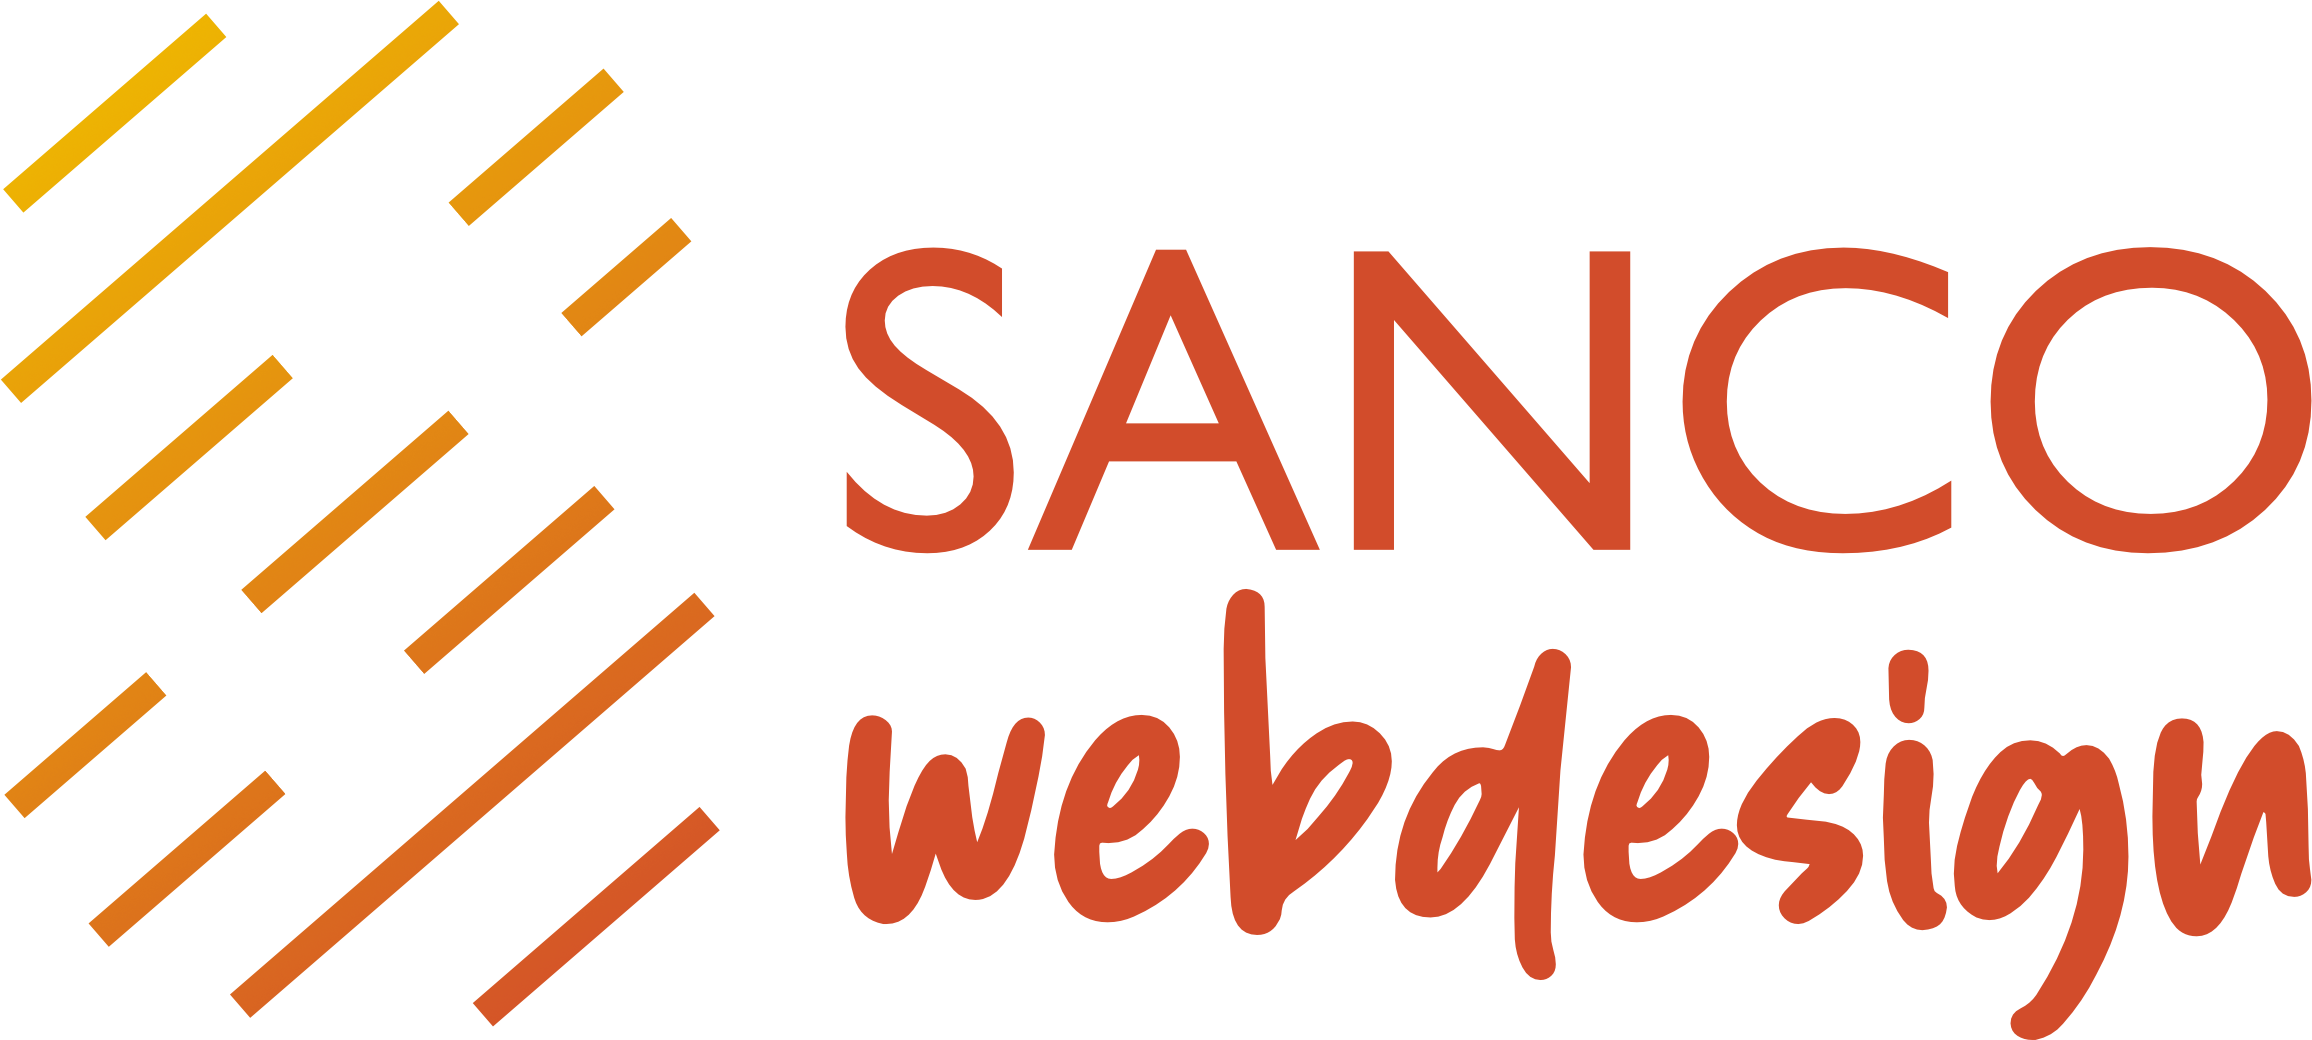 Sanco Webdesign